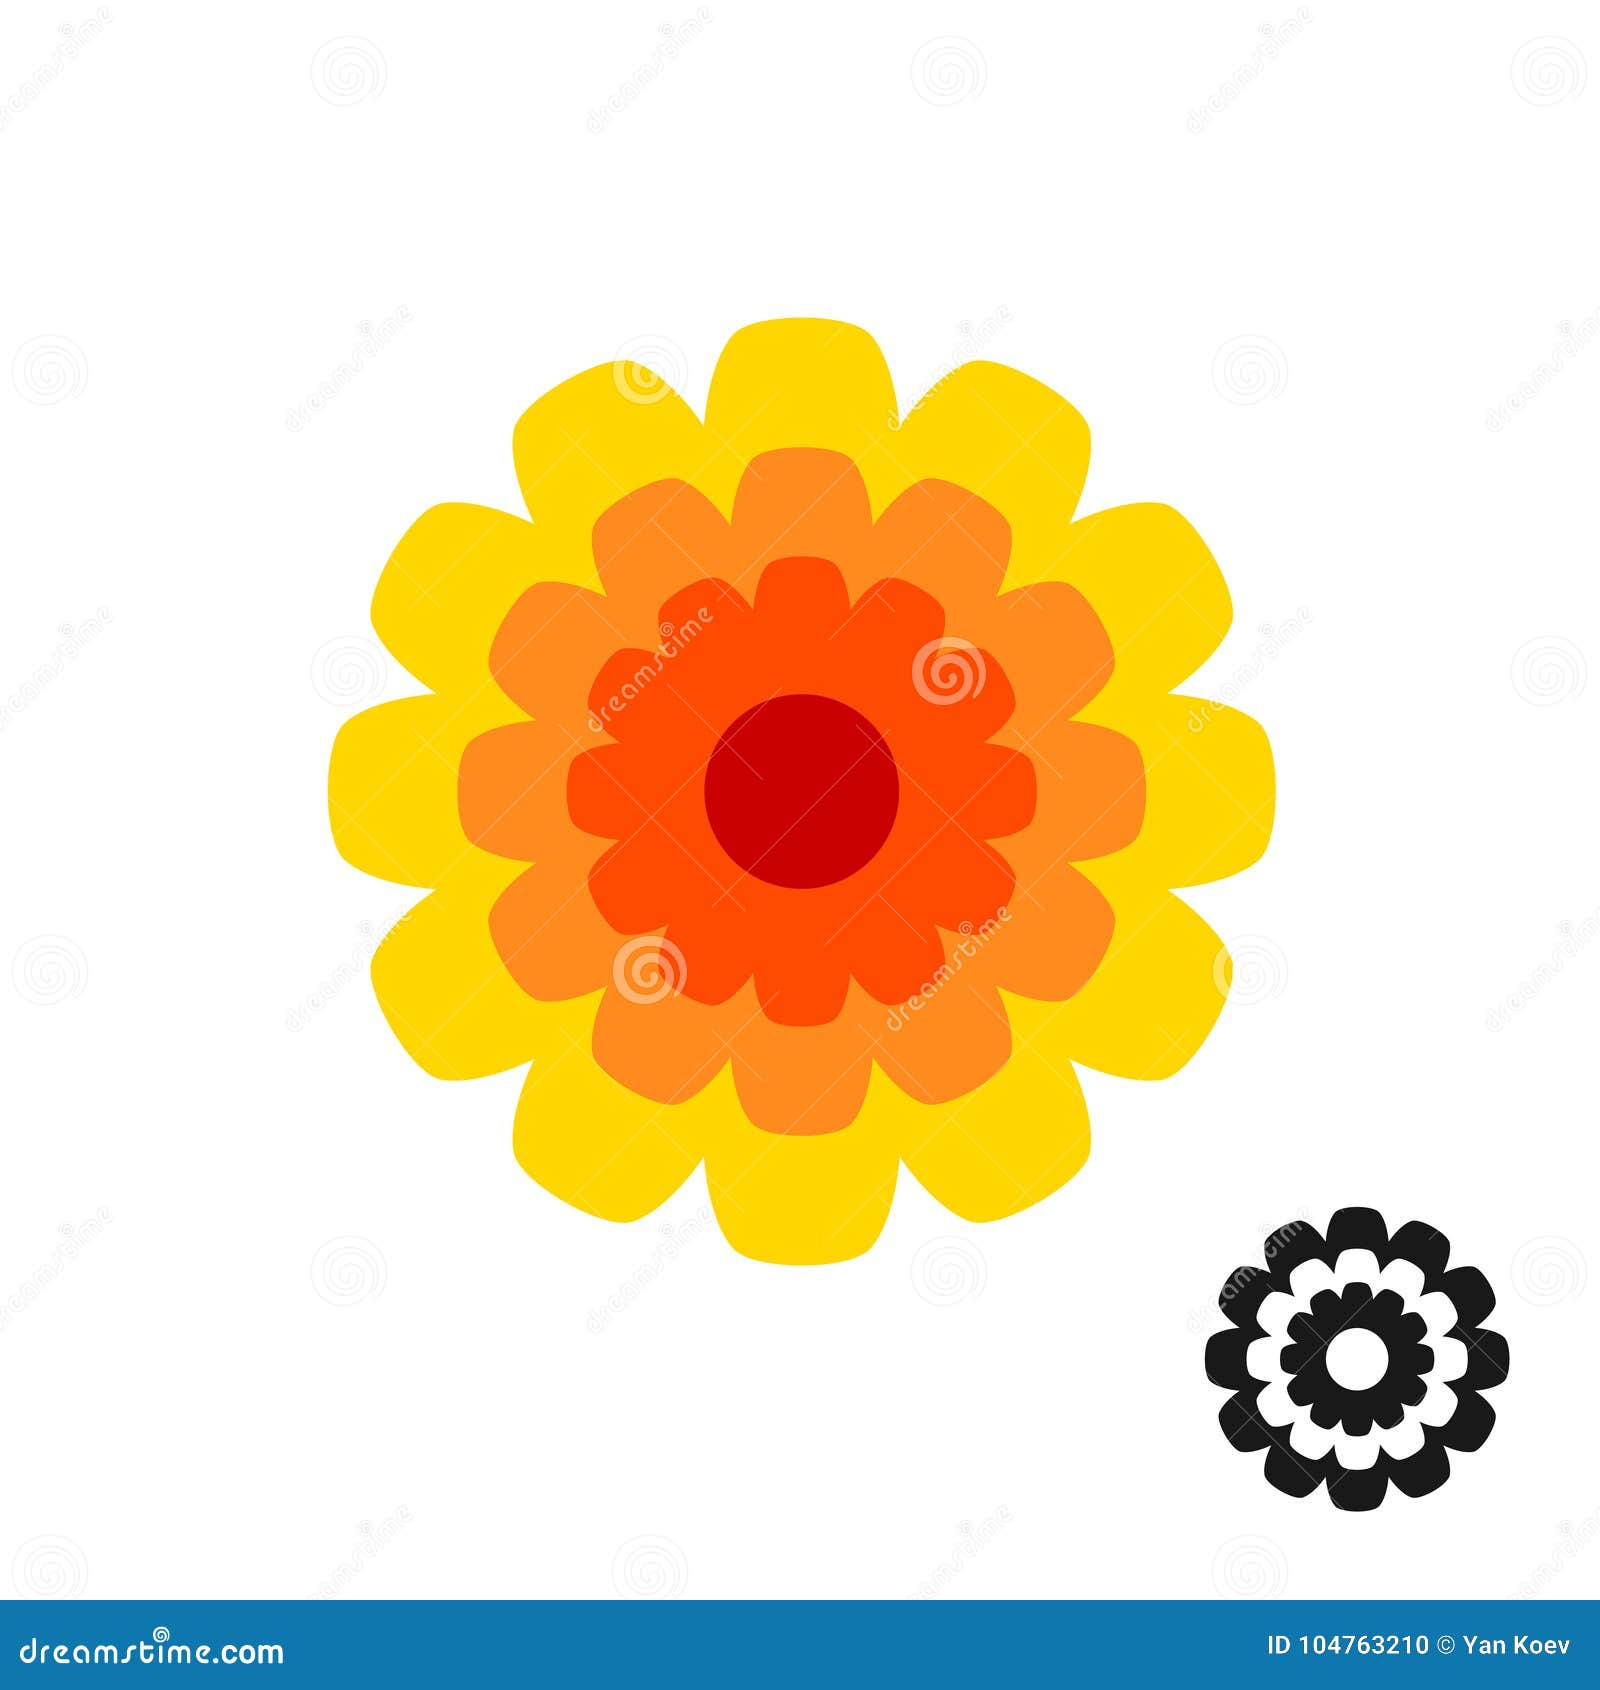 marigold calendula flower top view logo.